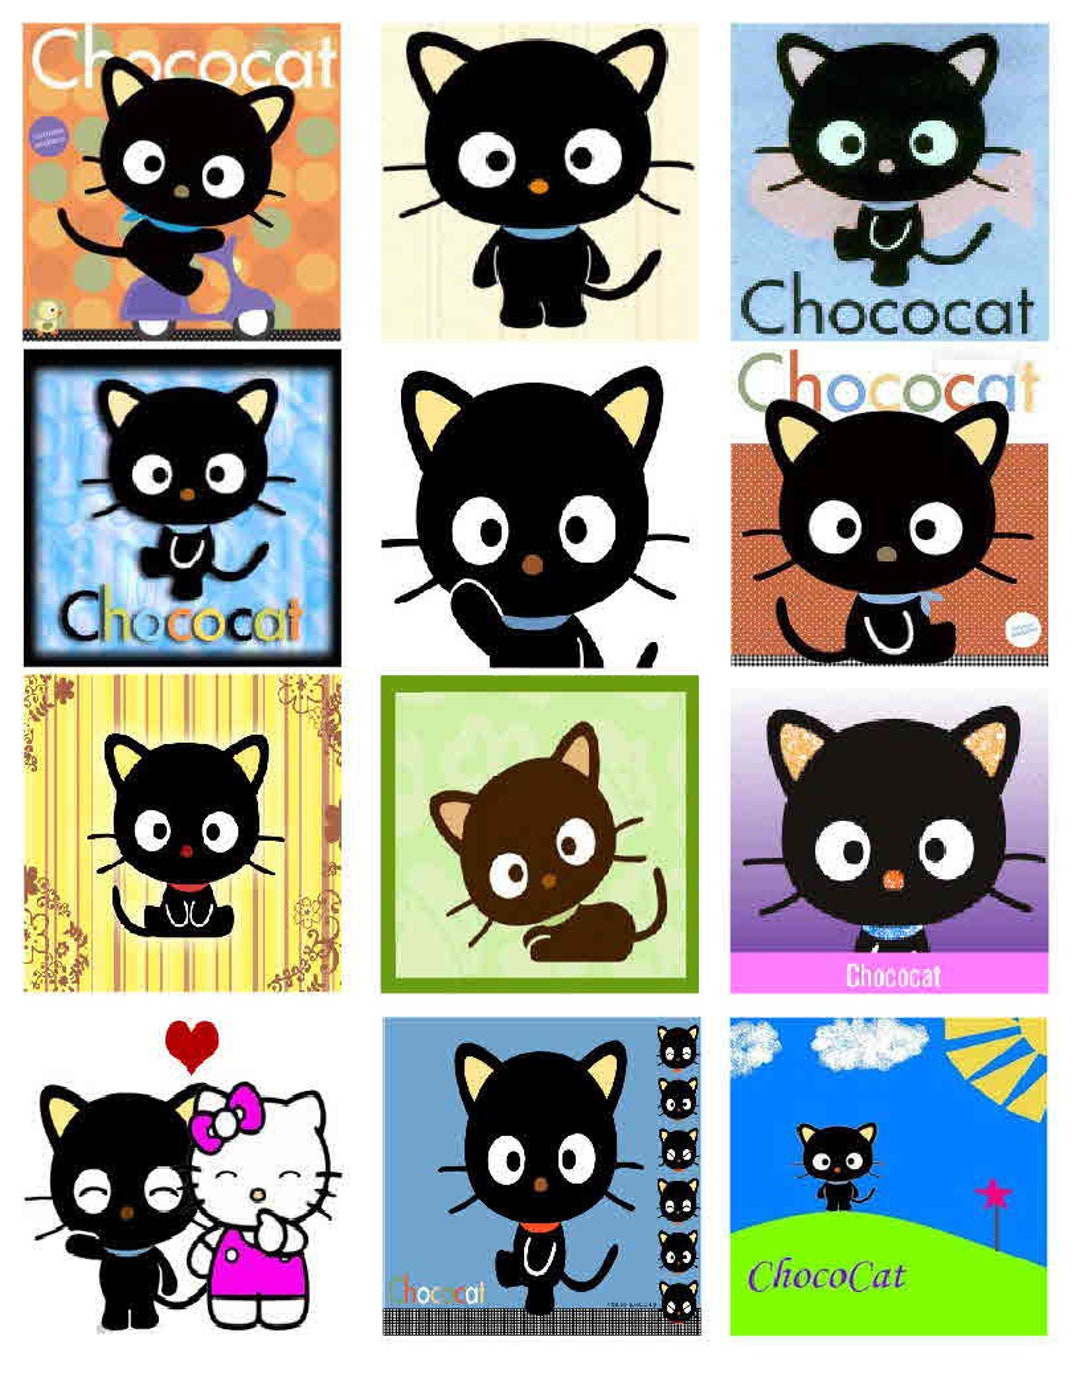 Chococat - Stickers for WhatsApp